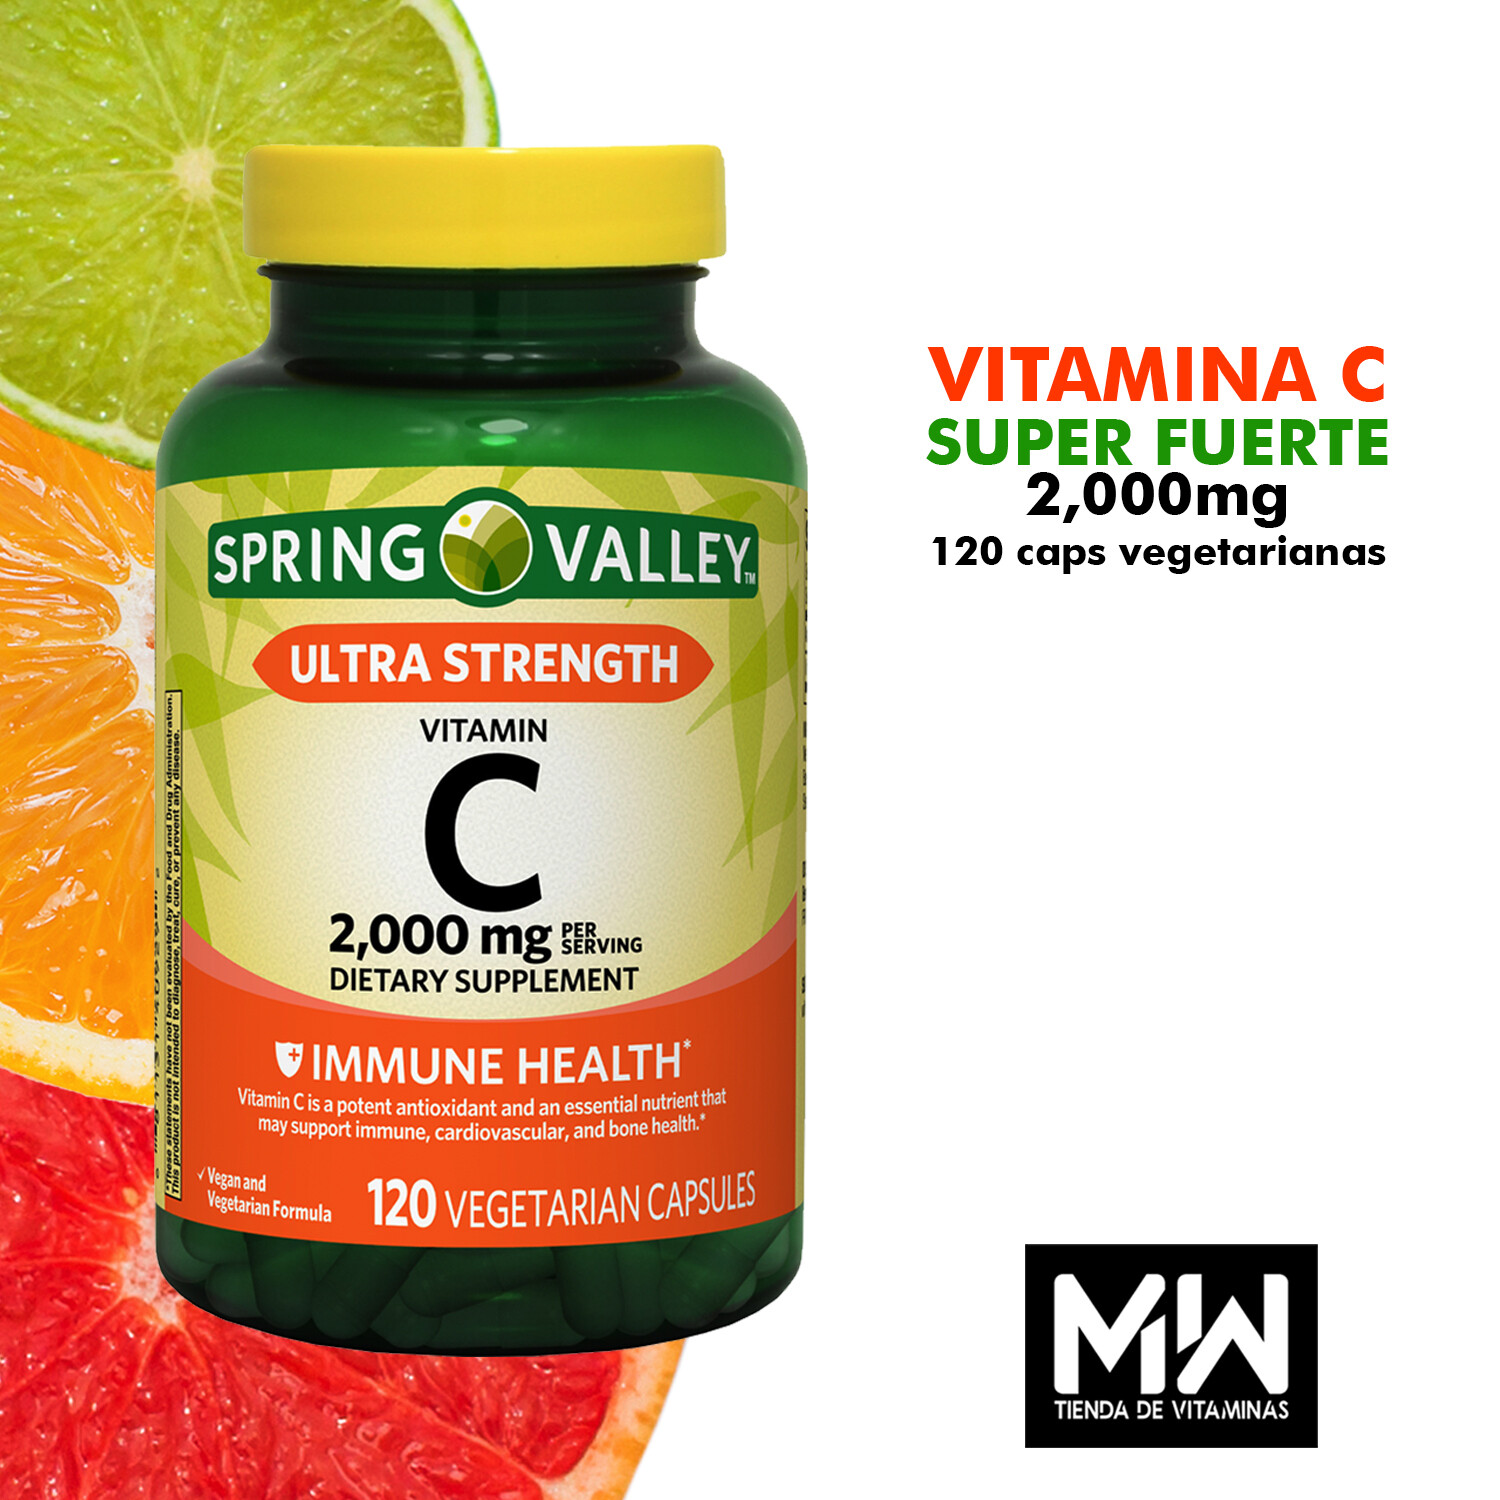 Vitamina C Super Fuerte / Vitamin C 2,000 mg. 120 cápsulas vegetarianas